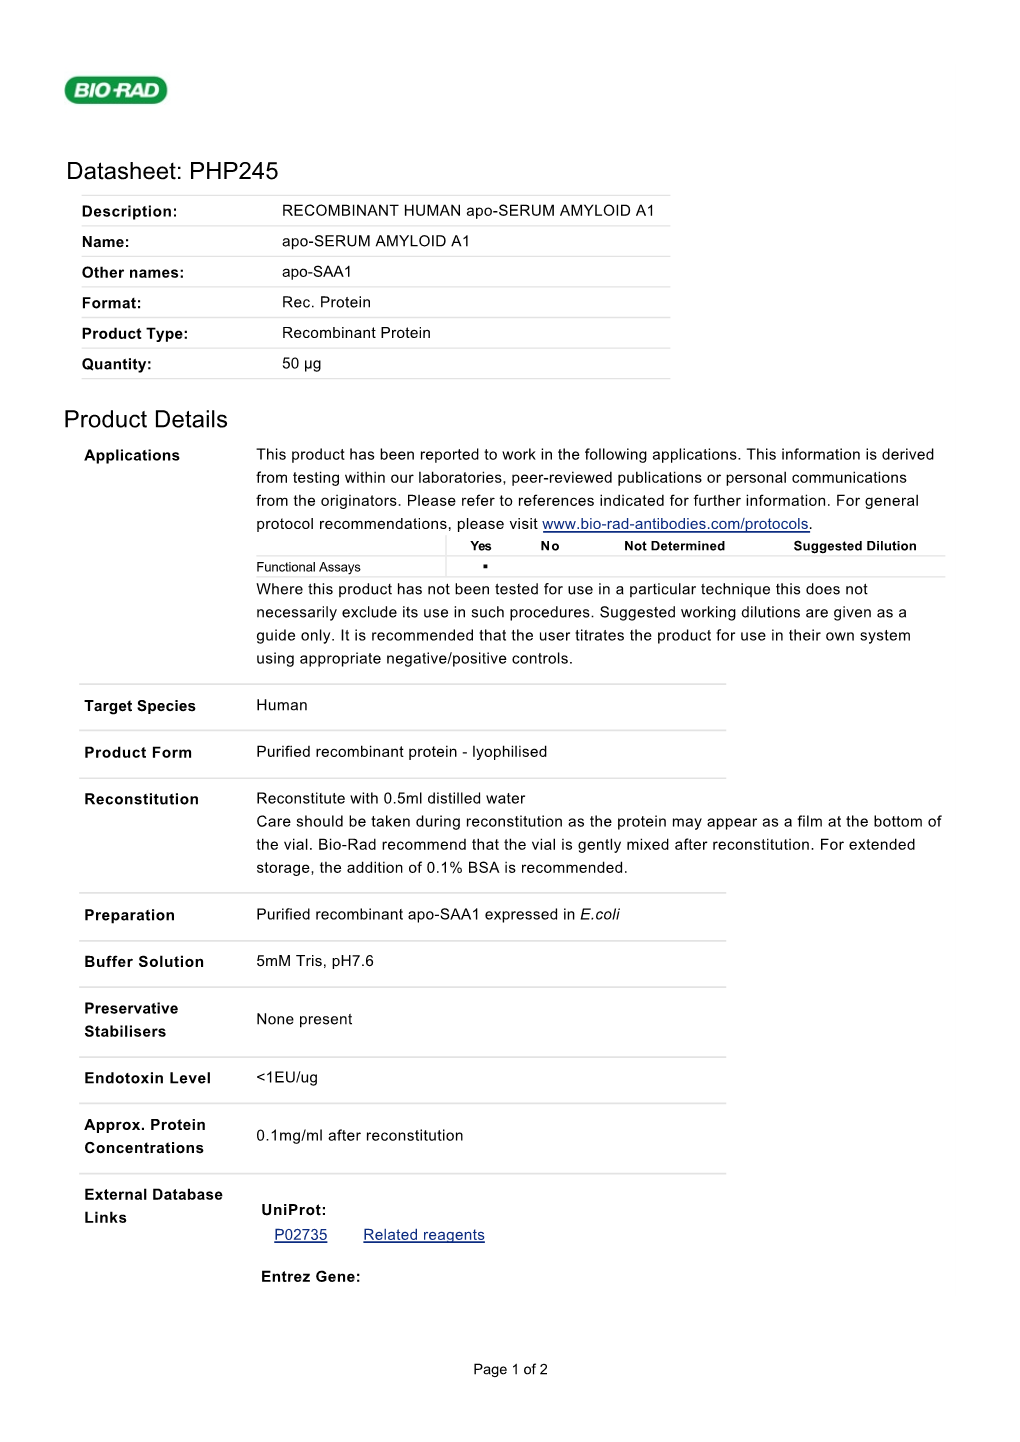 Datasheet: PHP245 Product Details